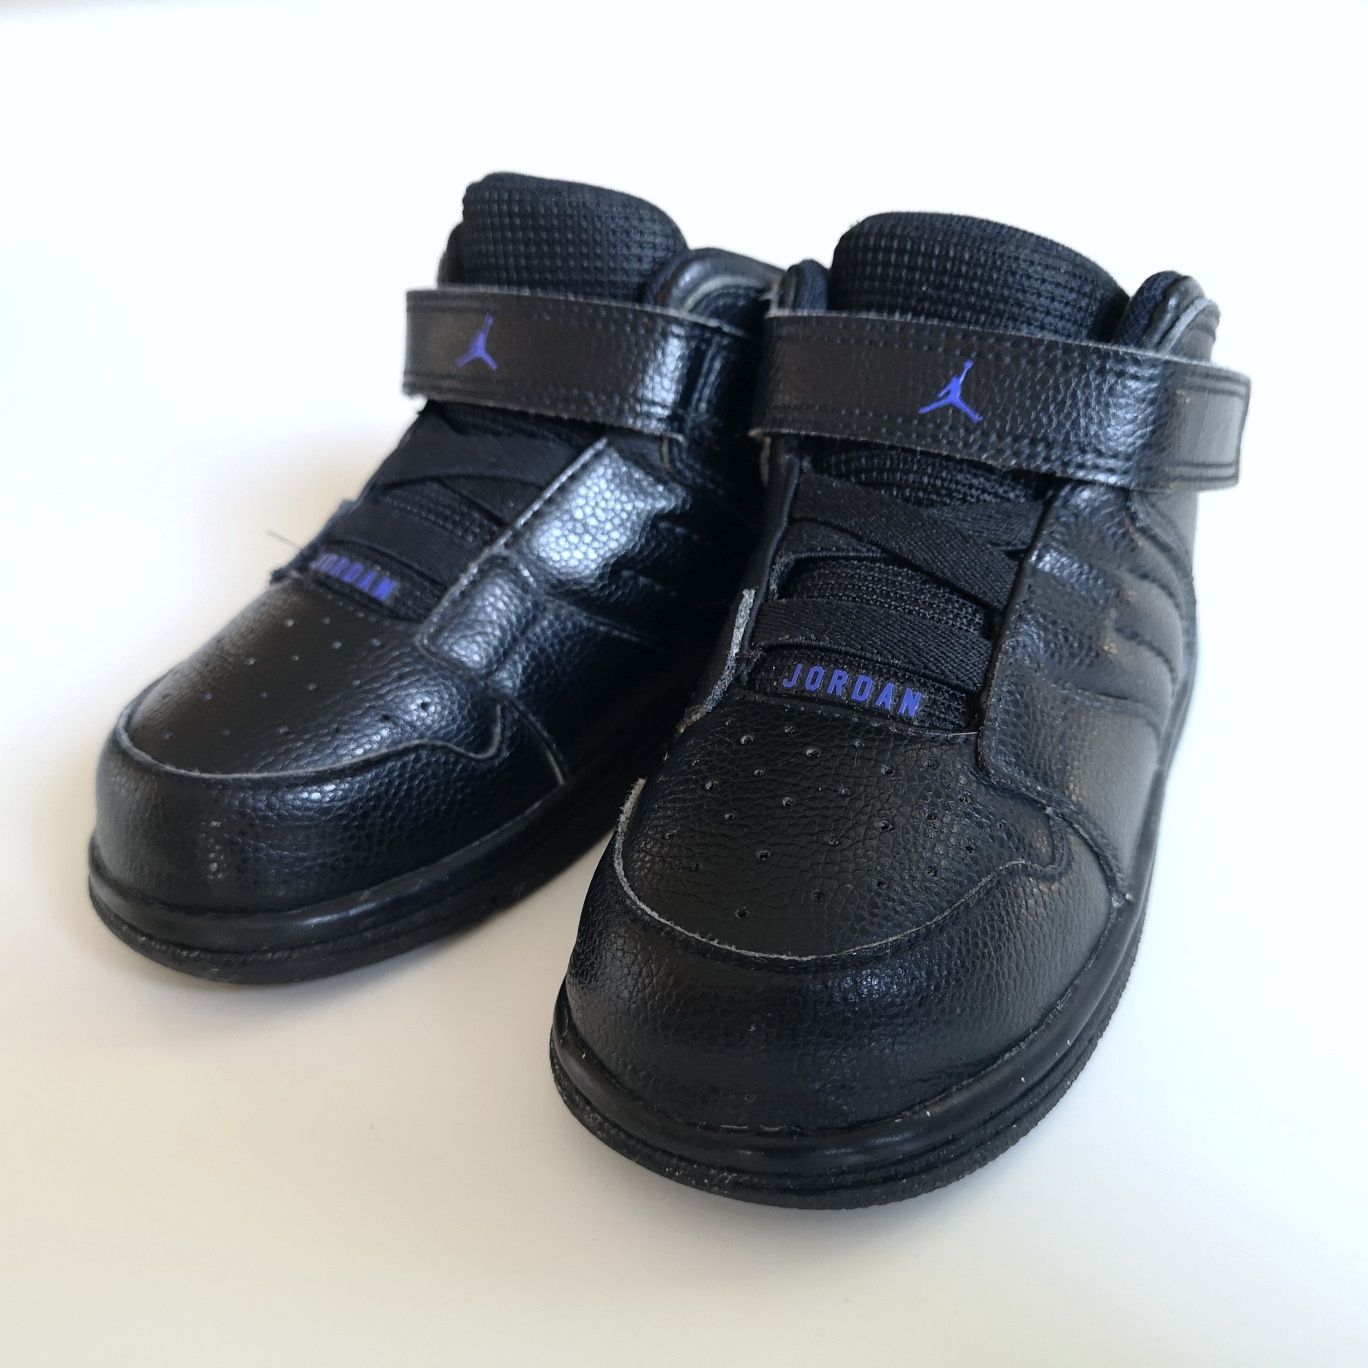 Czarne, skórzane buty sportowe Nike Jordan, rozmiar 25